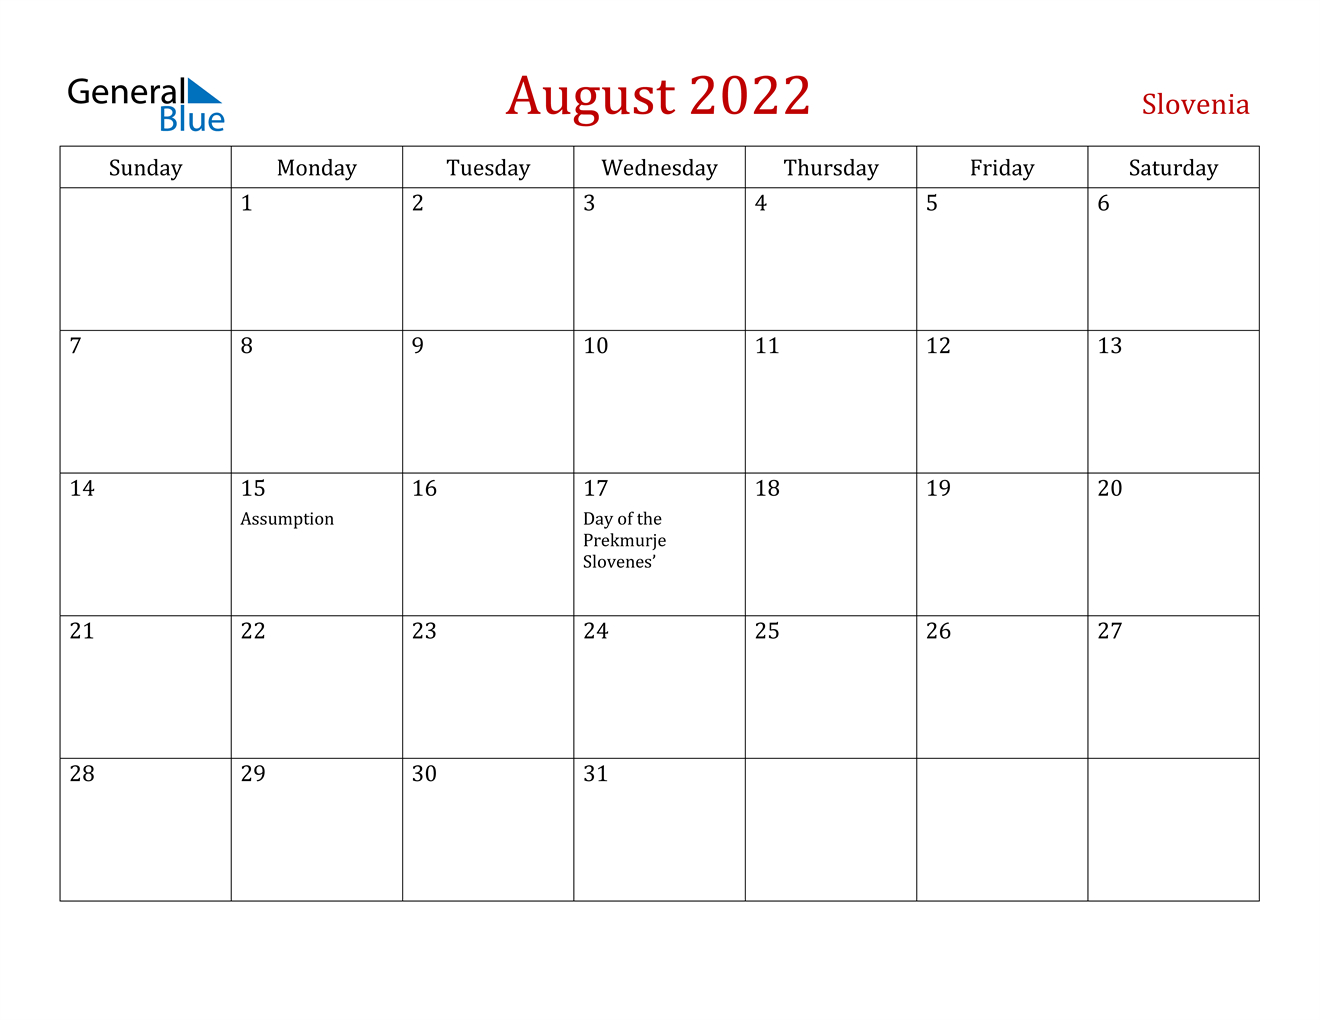 August 2022 Calendar - Slovenia